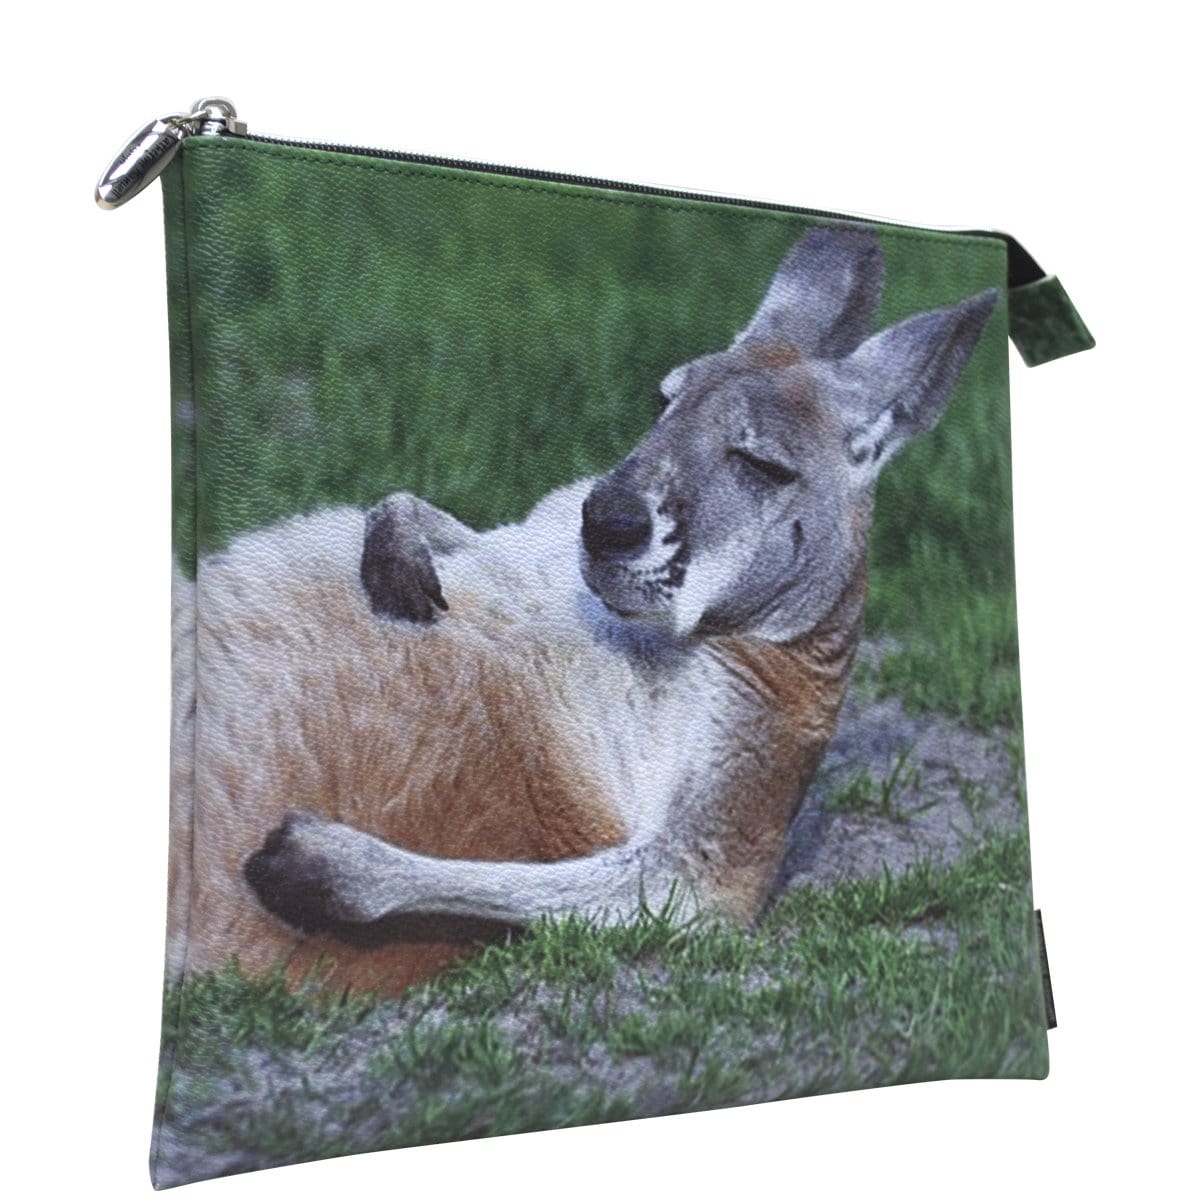 Kangaroo Pouch by Buma